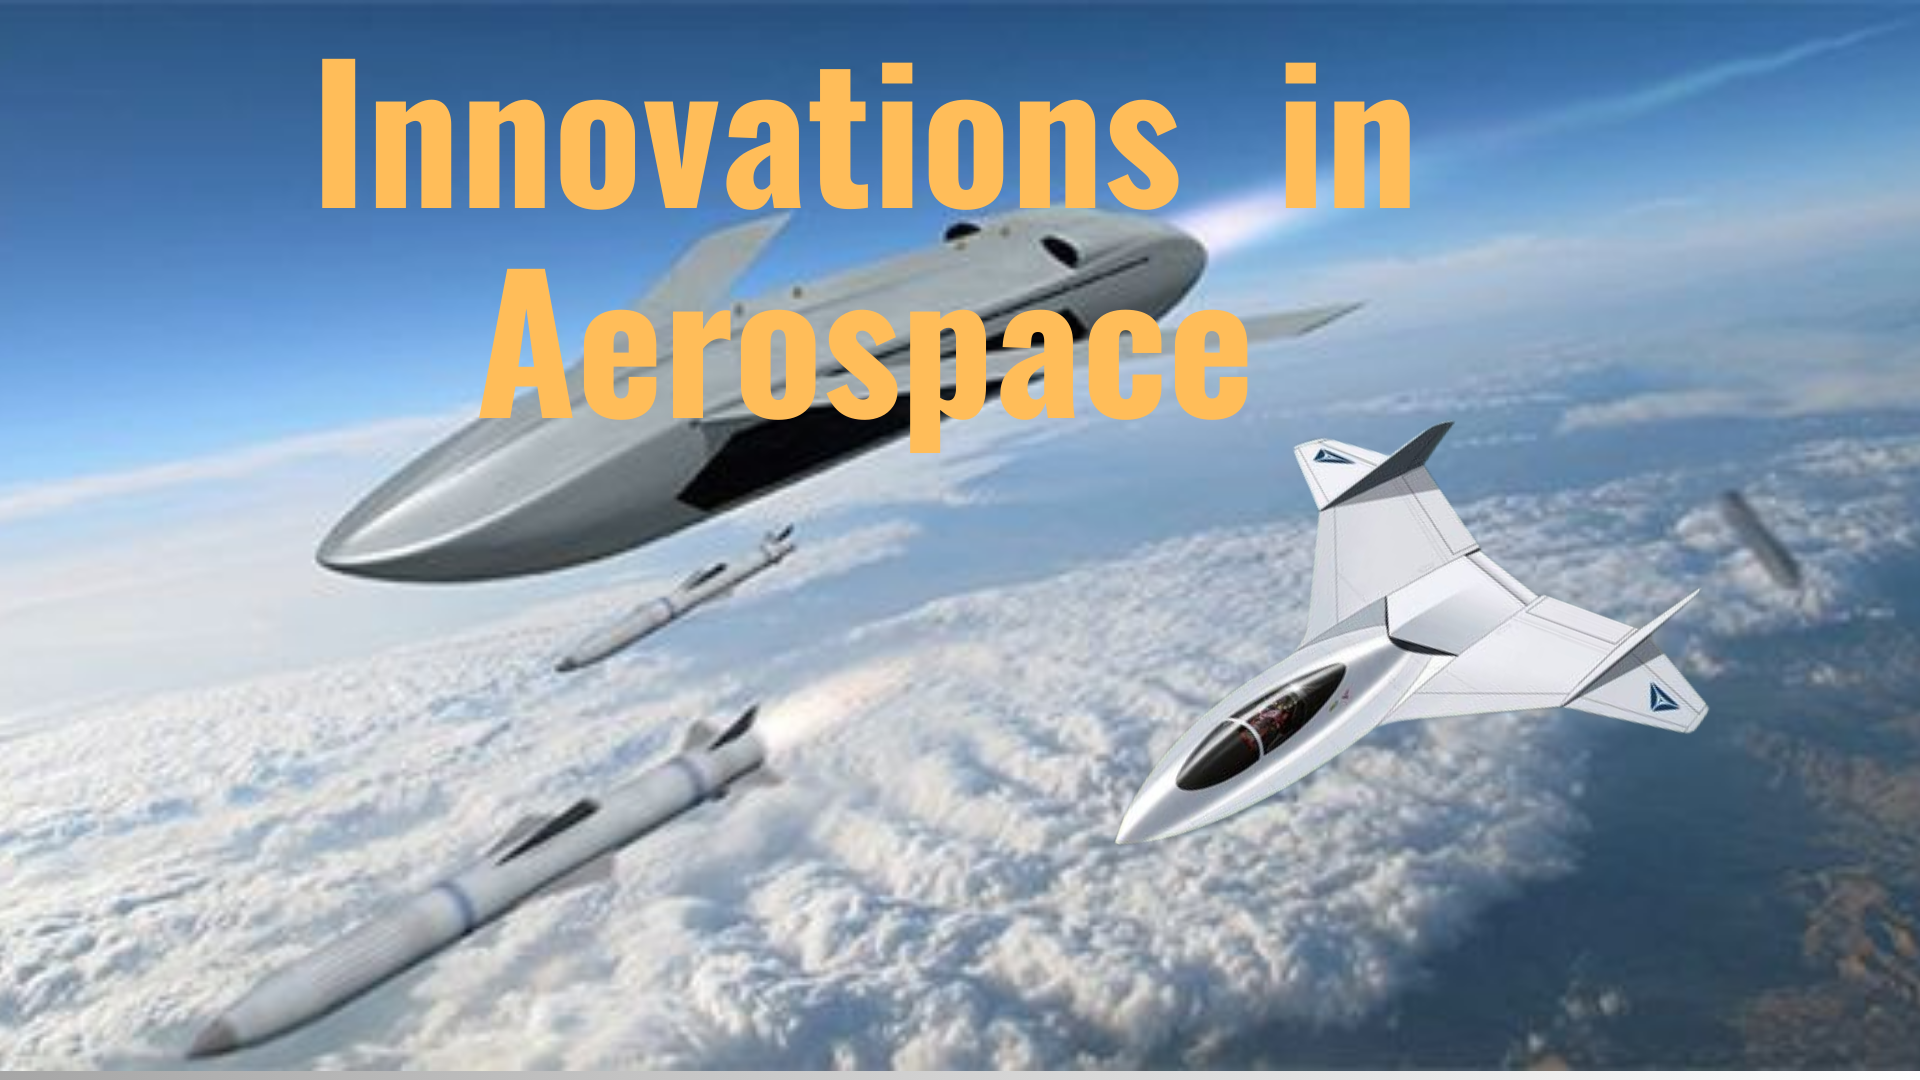 Innovation in Aerospace